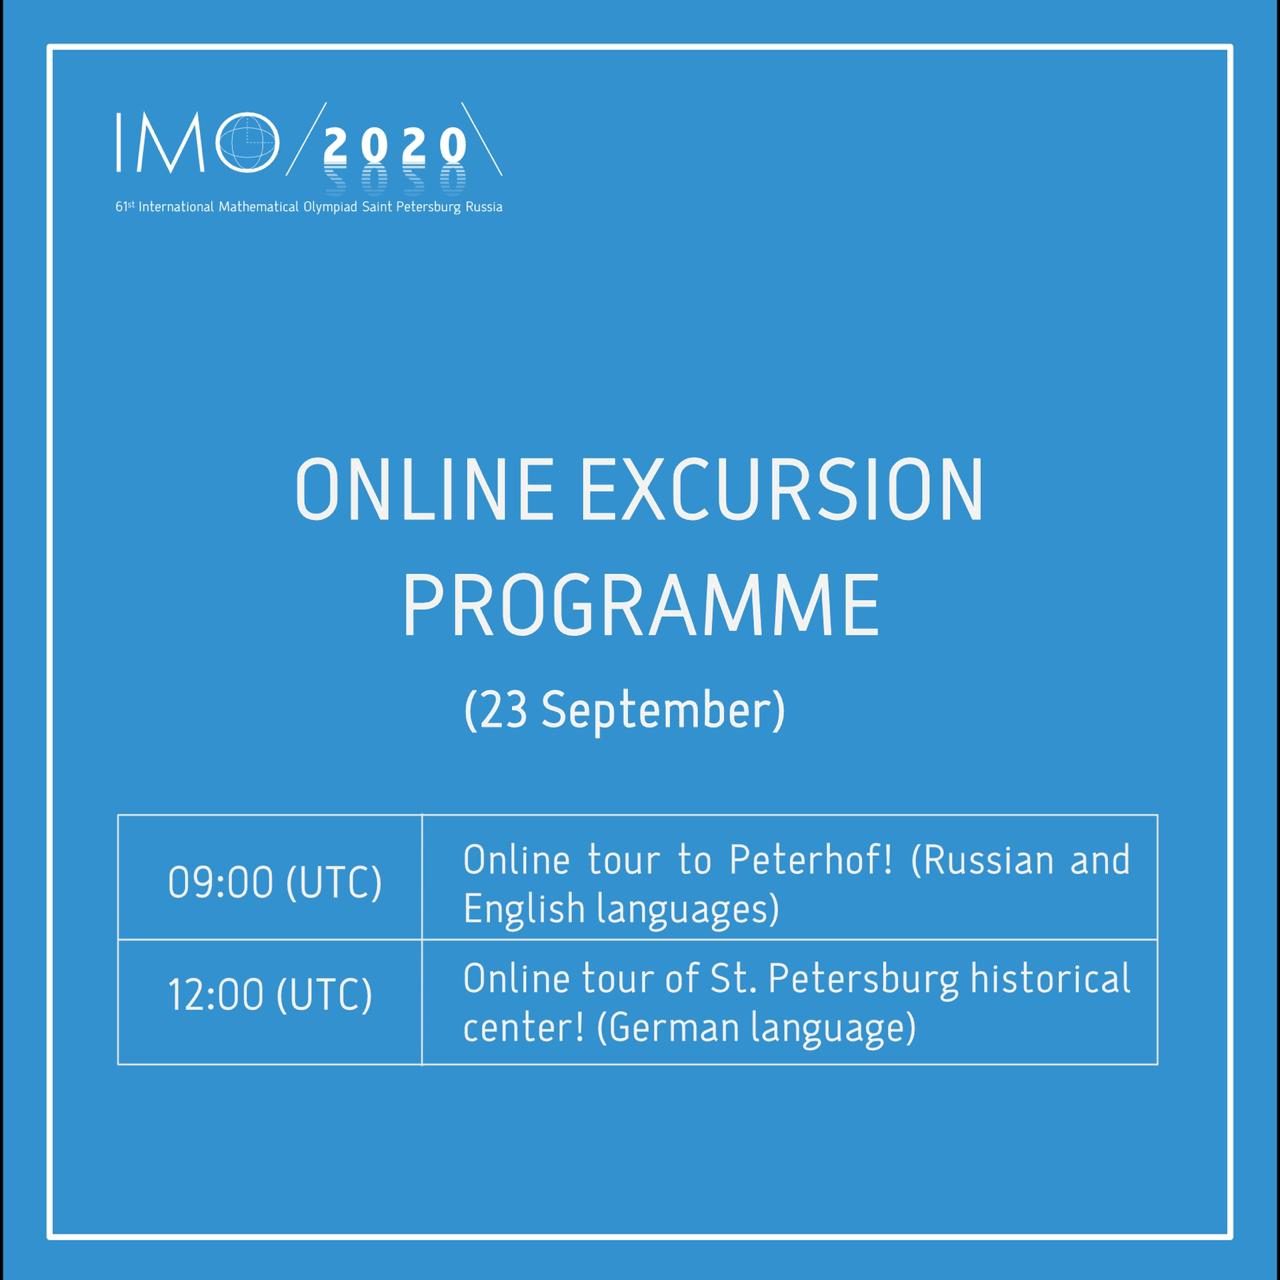 Online excursion programme